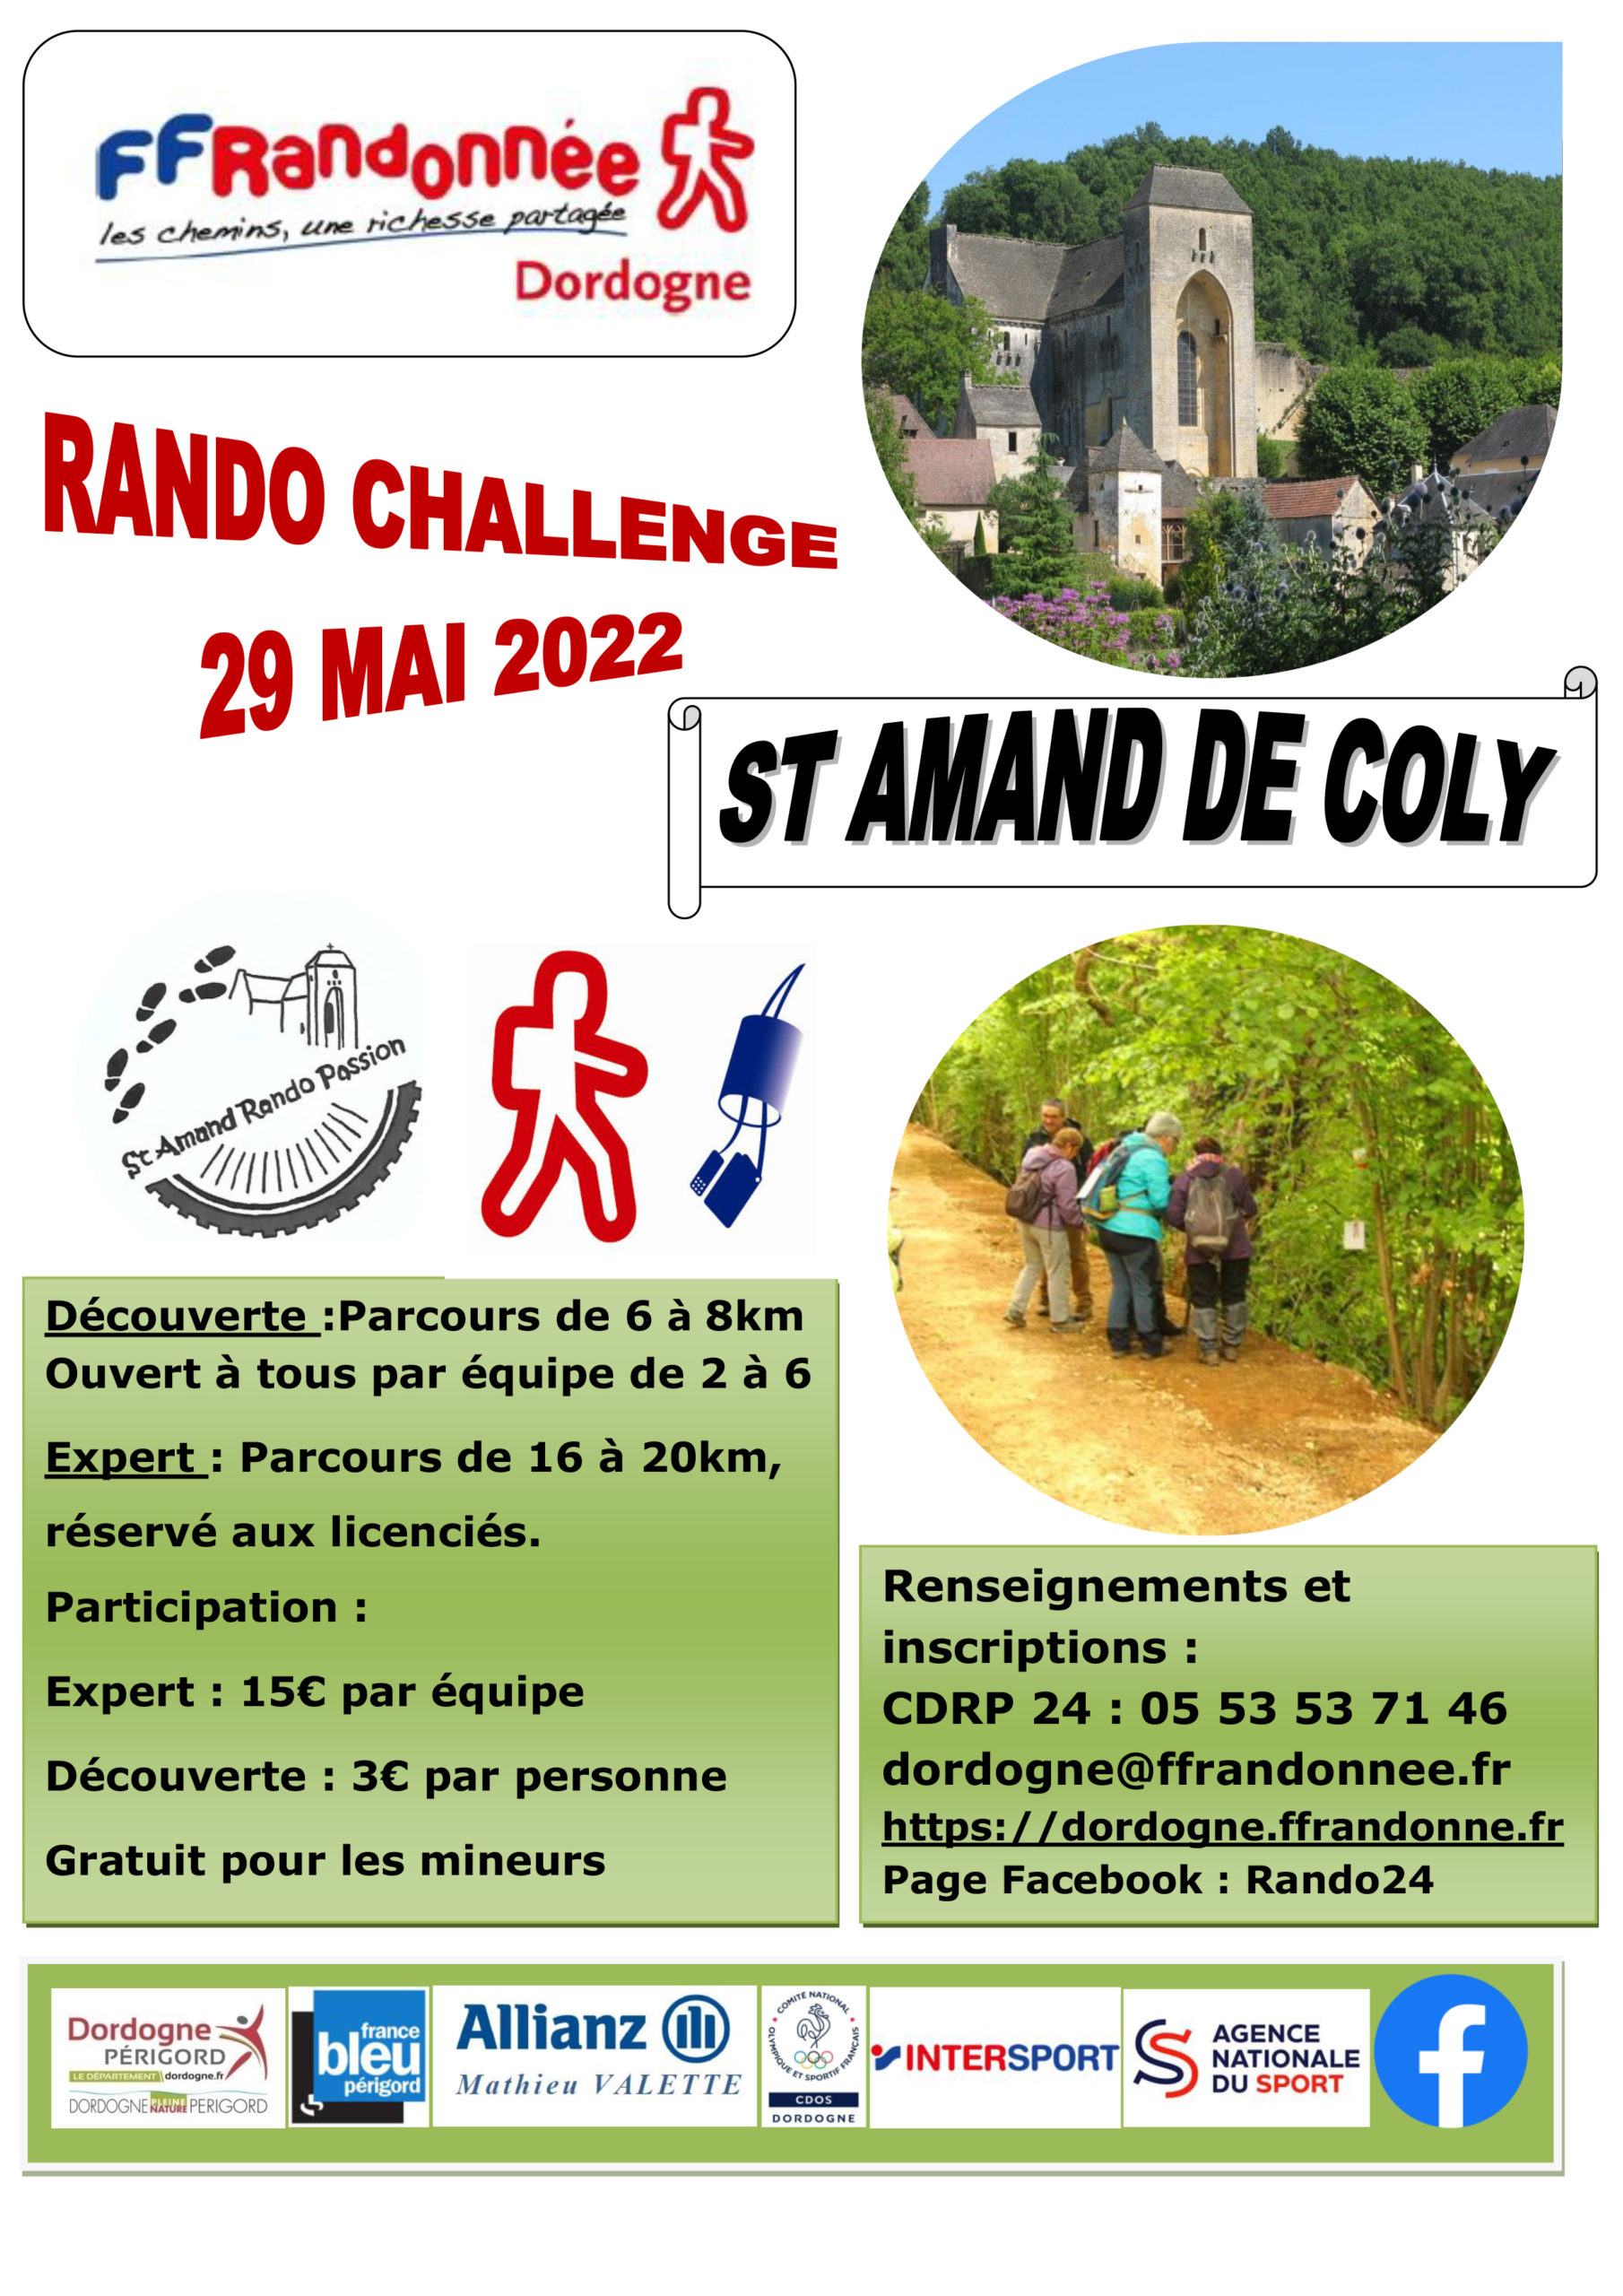 Rando Challenge 29 mai 2022